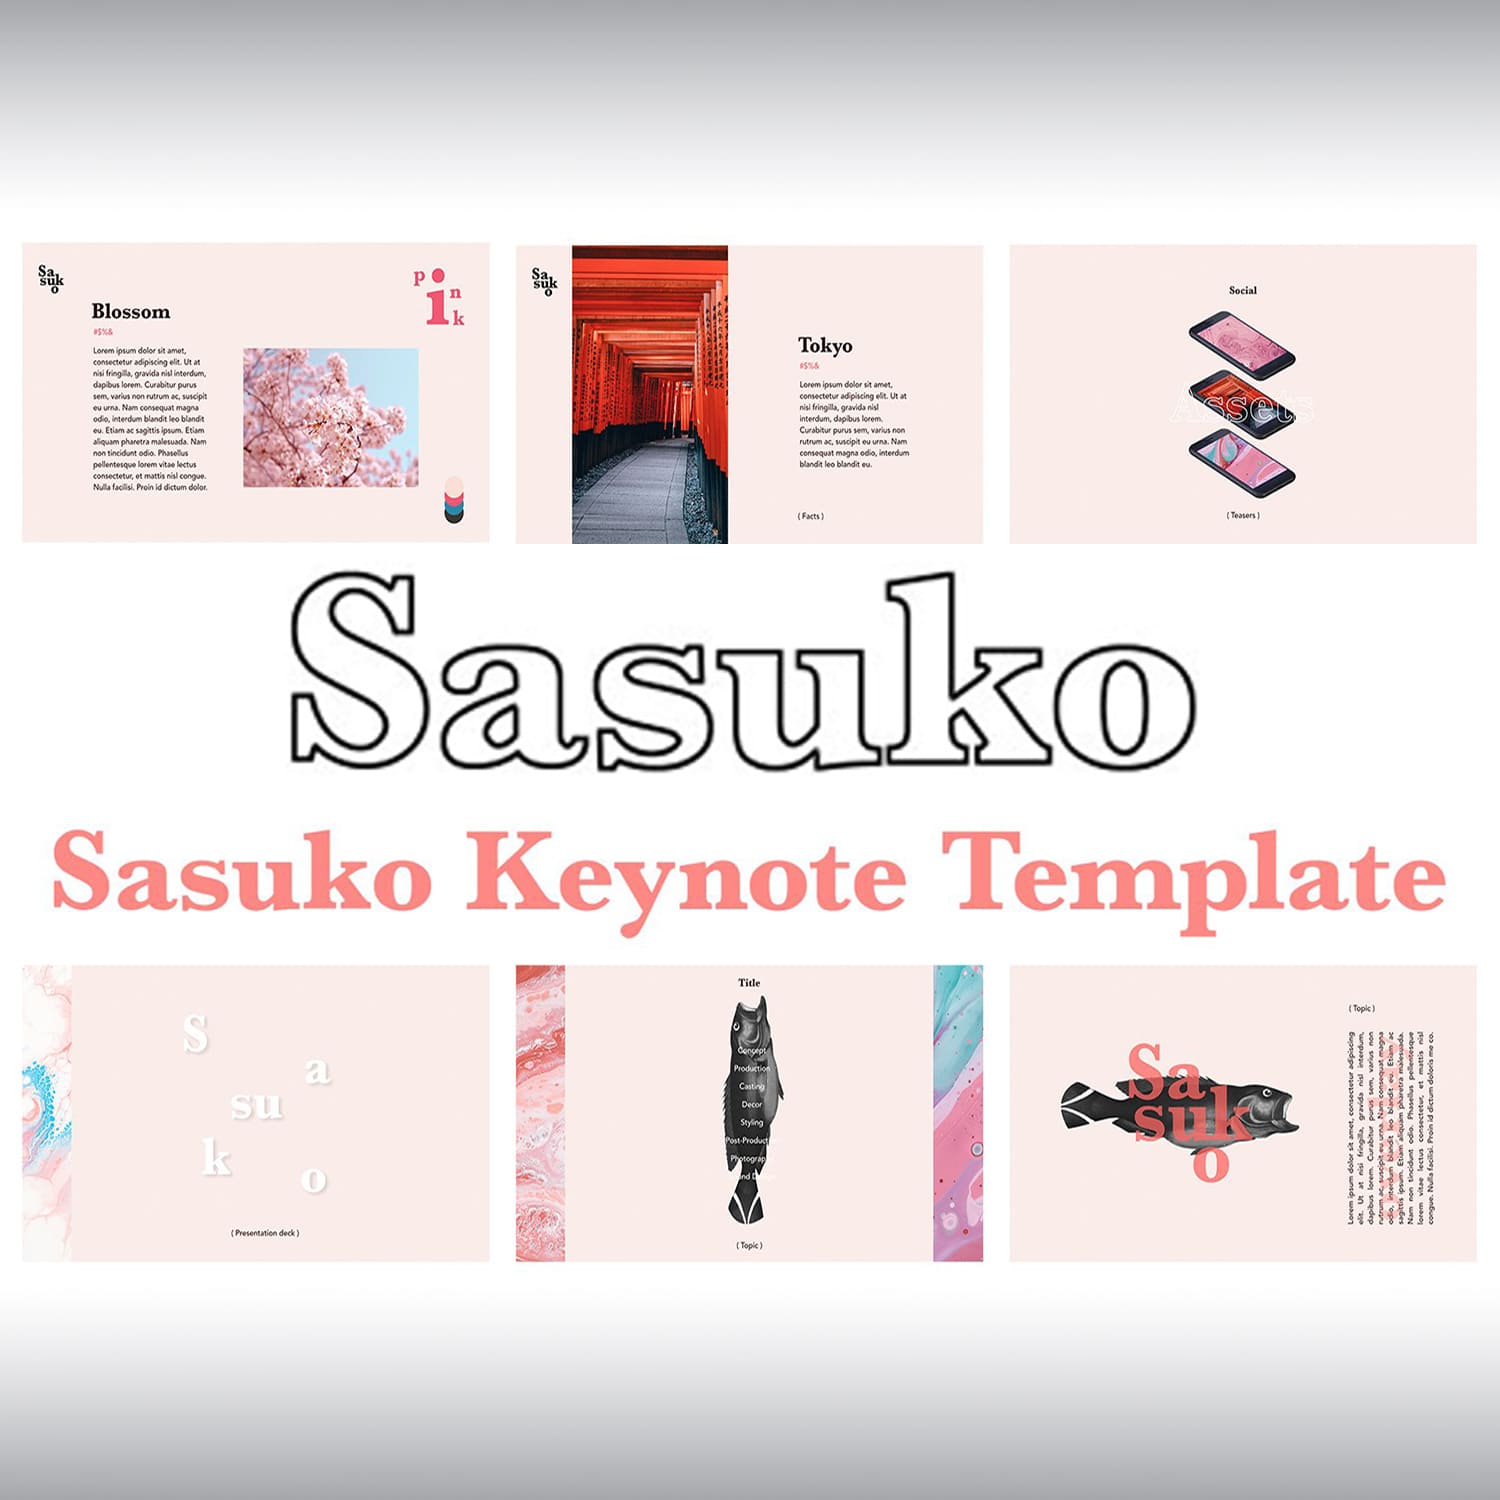 Sasuko Keynote Template.